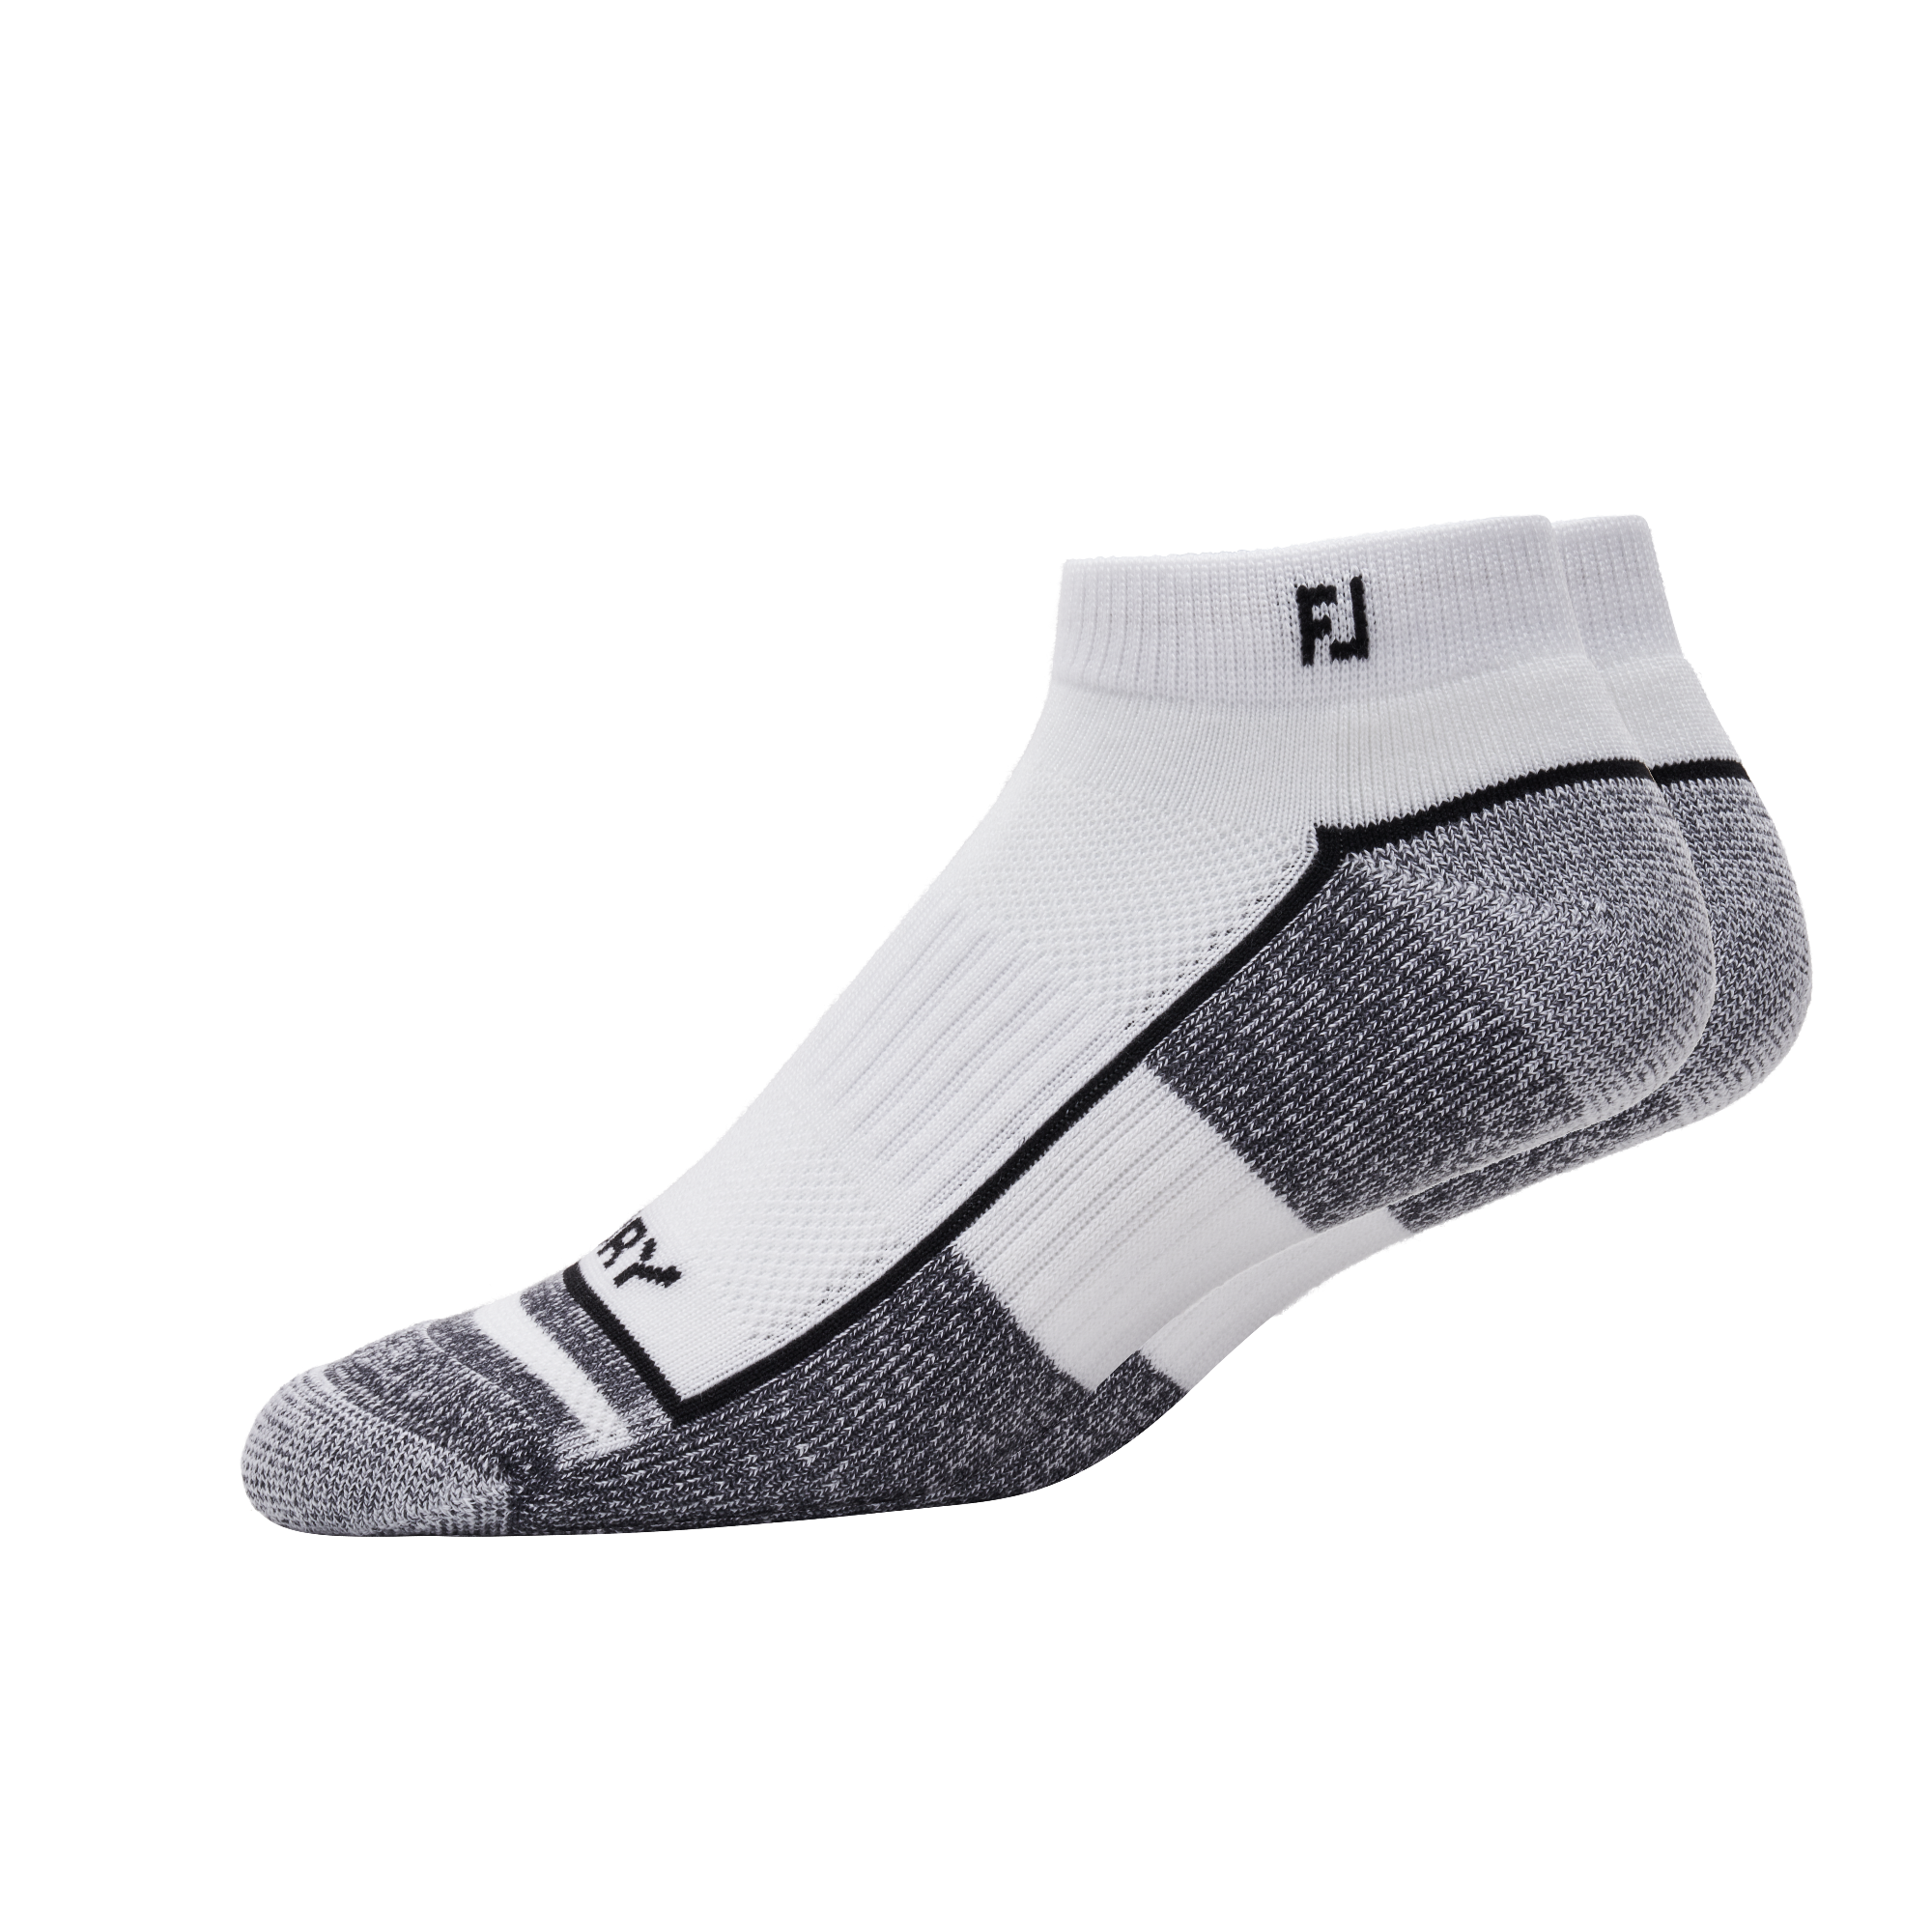 Men's Golf Socks in Several Cut, Fit & Style Options | FootJoy